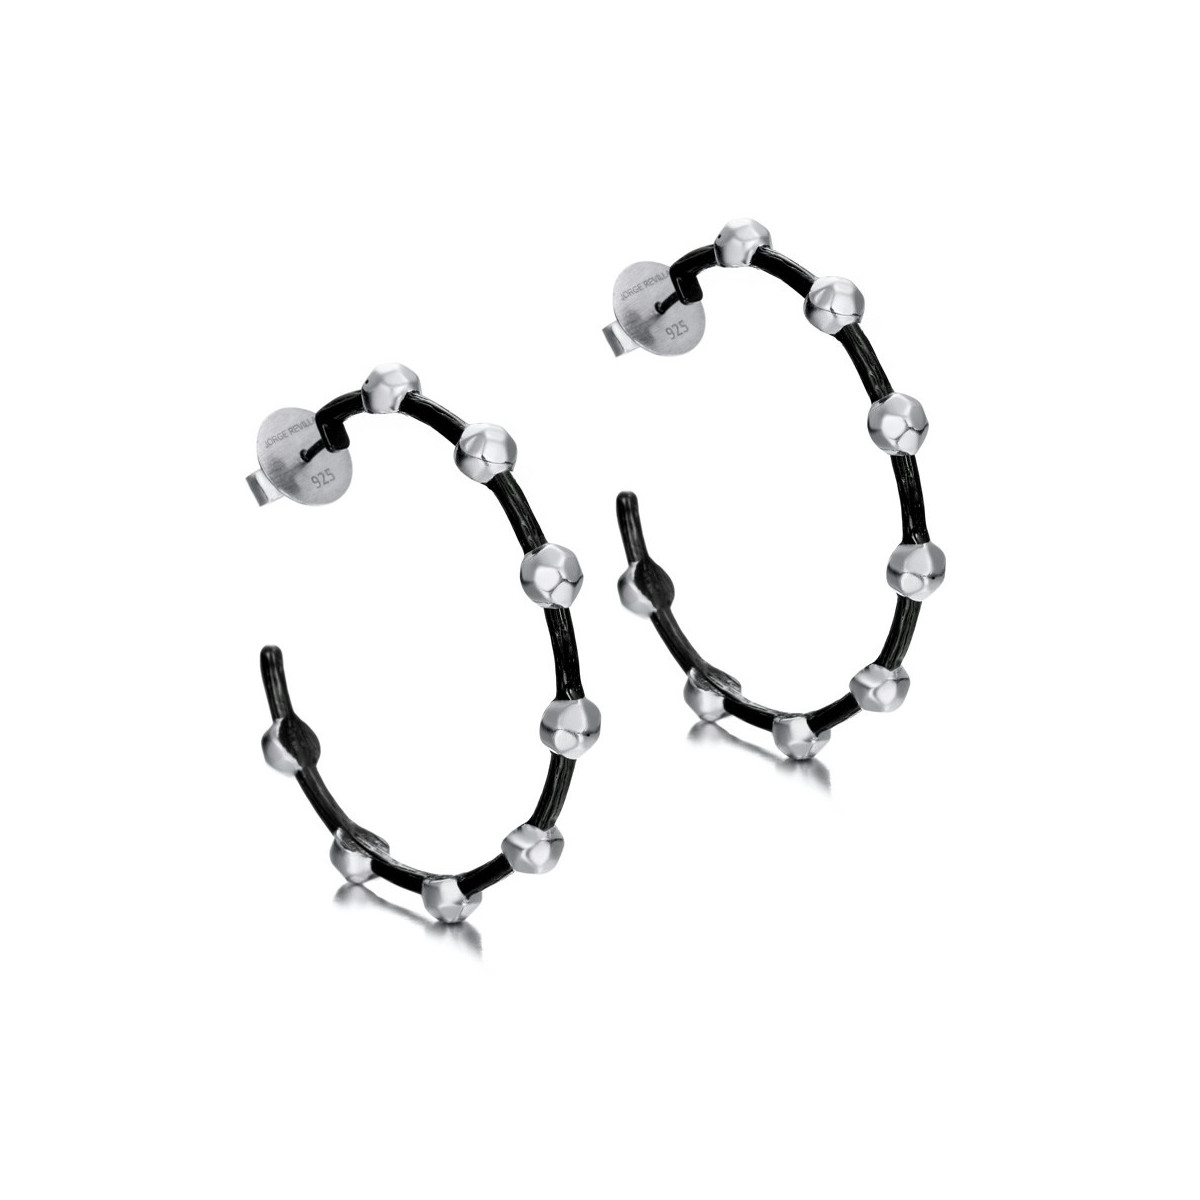 CELESTIAL Earrings in Silver and Black Ruthenium